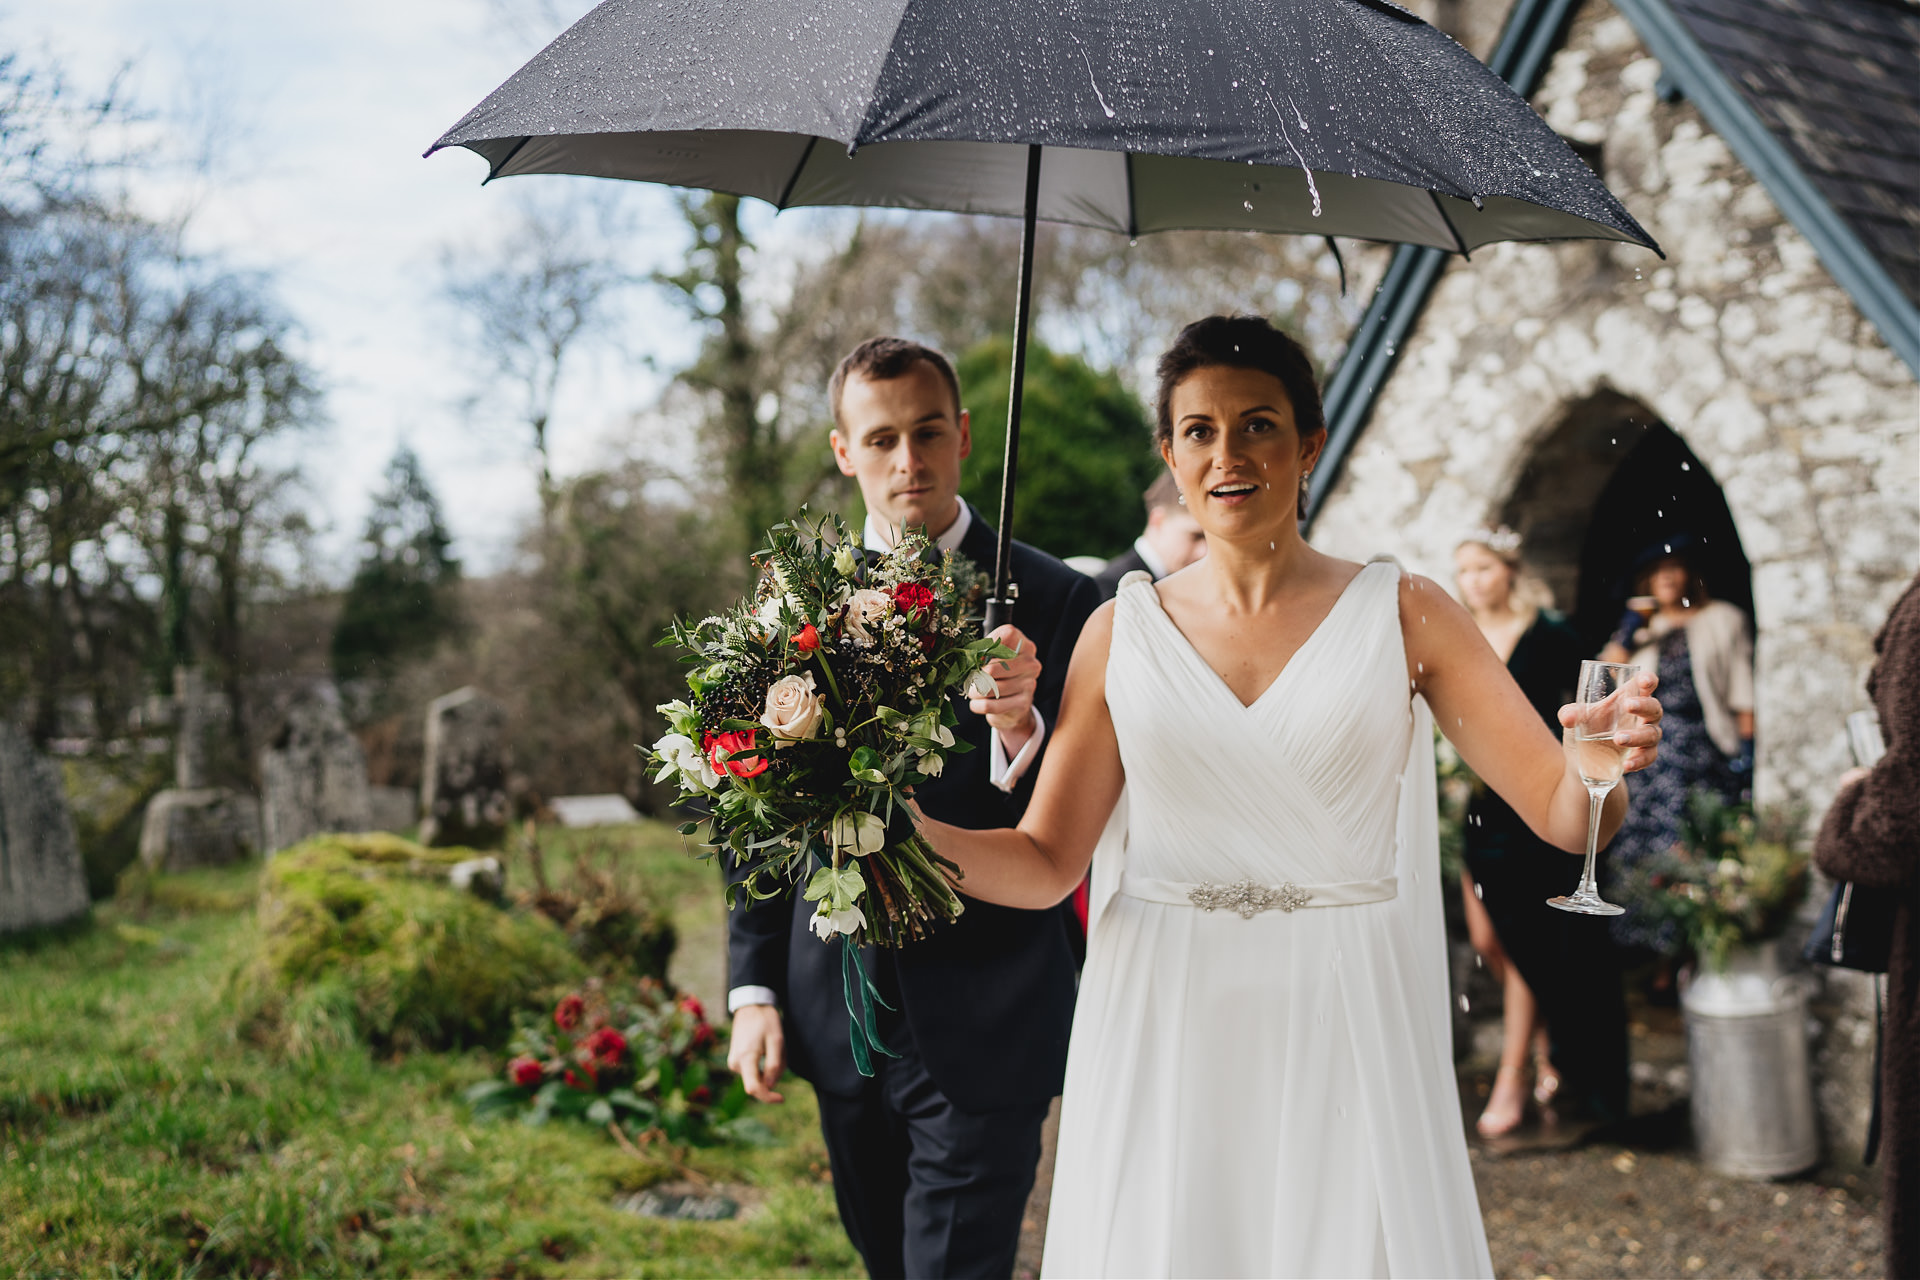 A bride under an umbrella in the rain